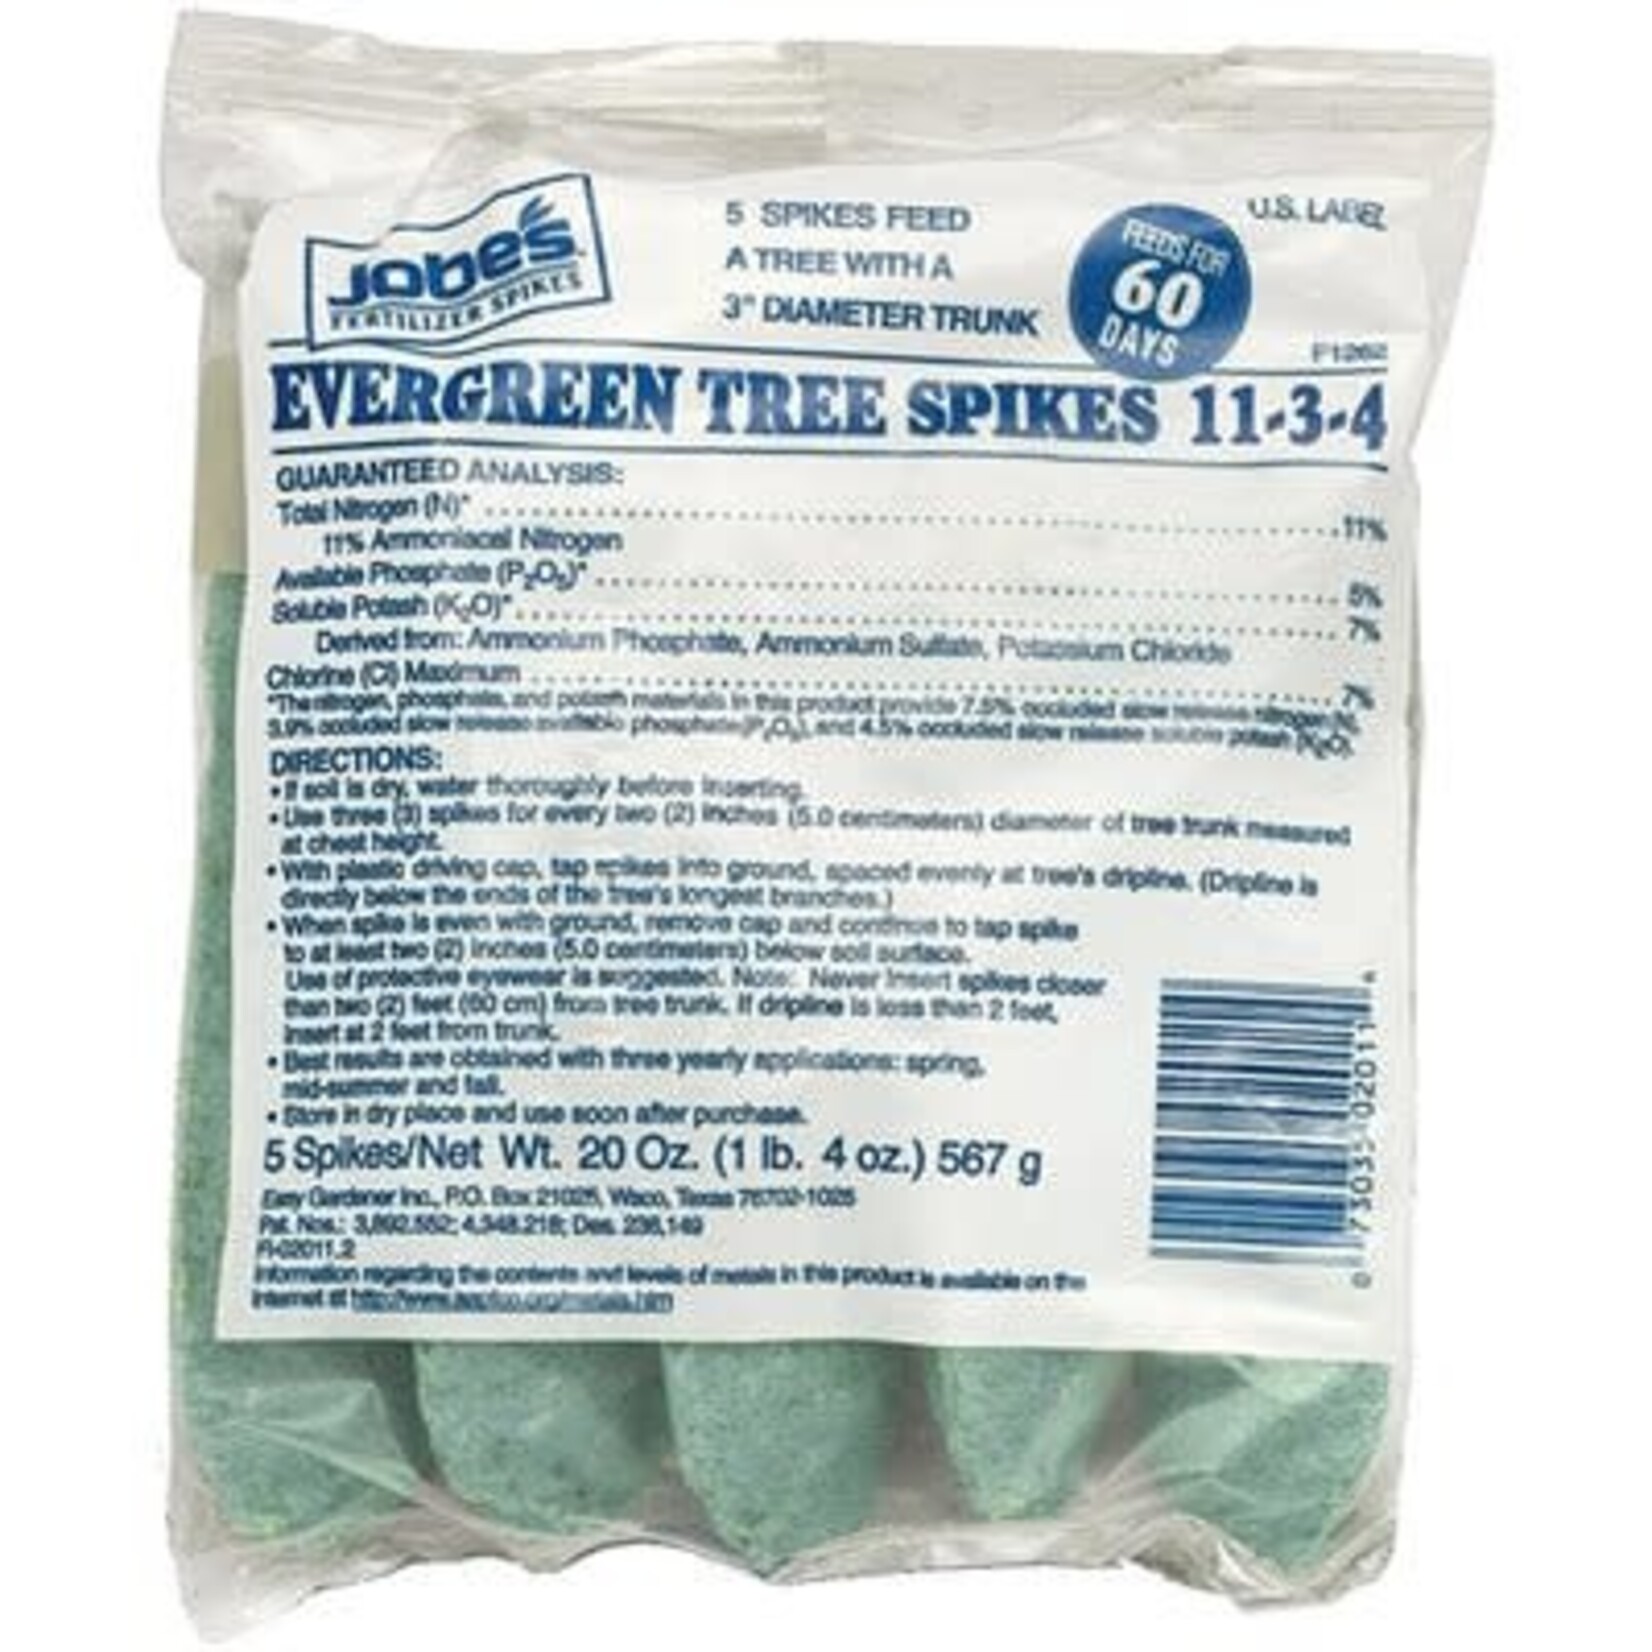 EDDIS Jobes Evergreen Tree Fertilizer Spikes (5 pack)